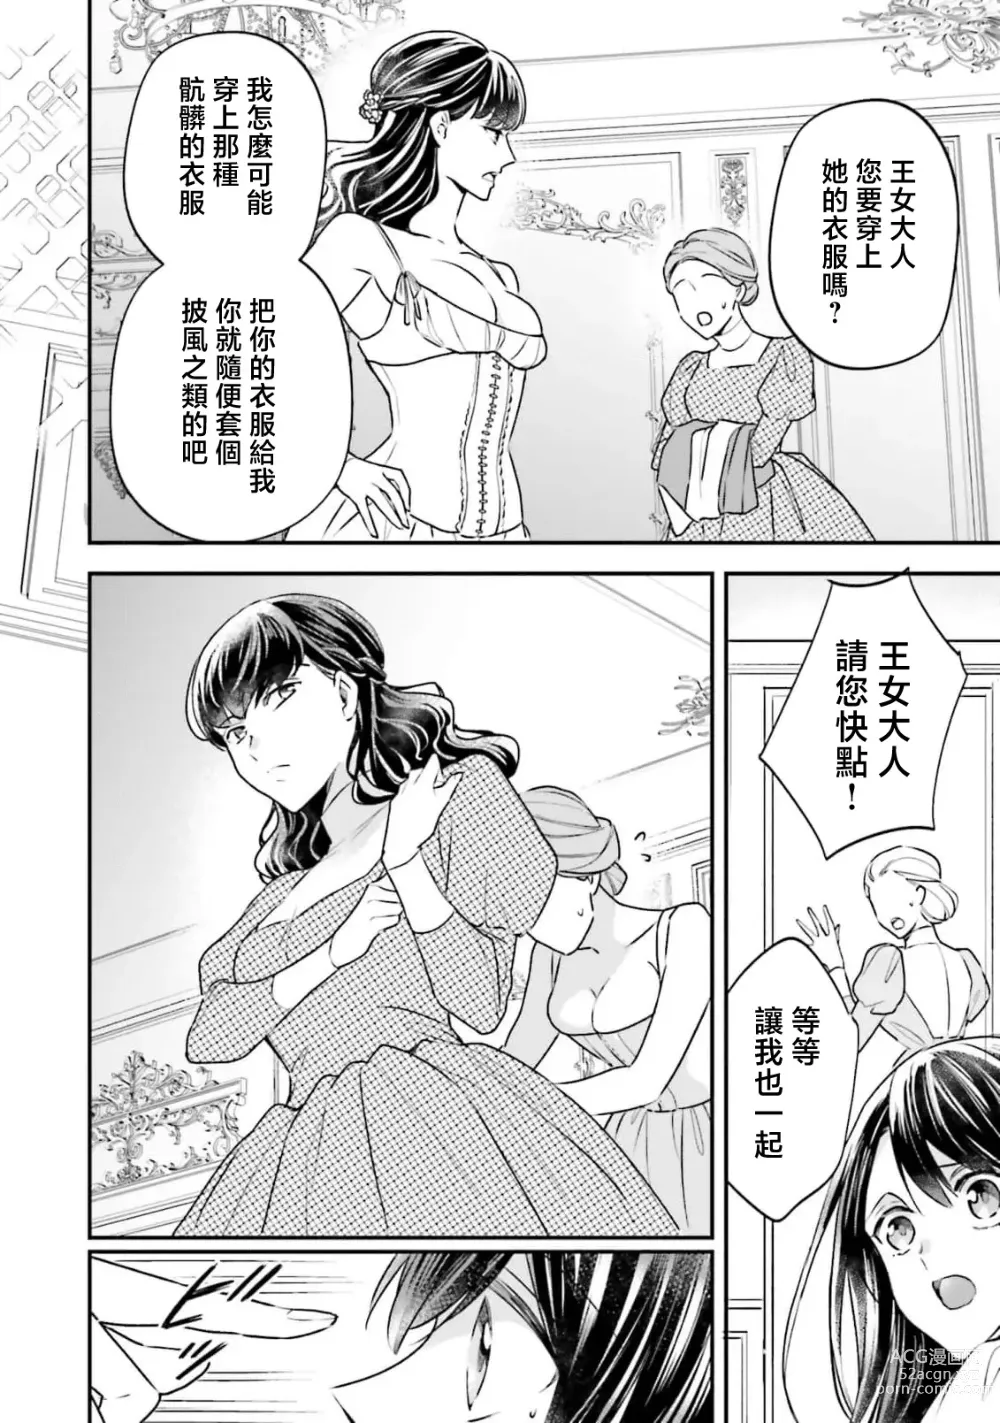 Page 18 of manga 在异世界成为了替身公主被霸王掳走了 1-6